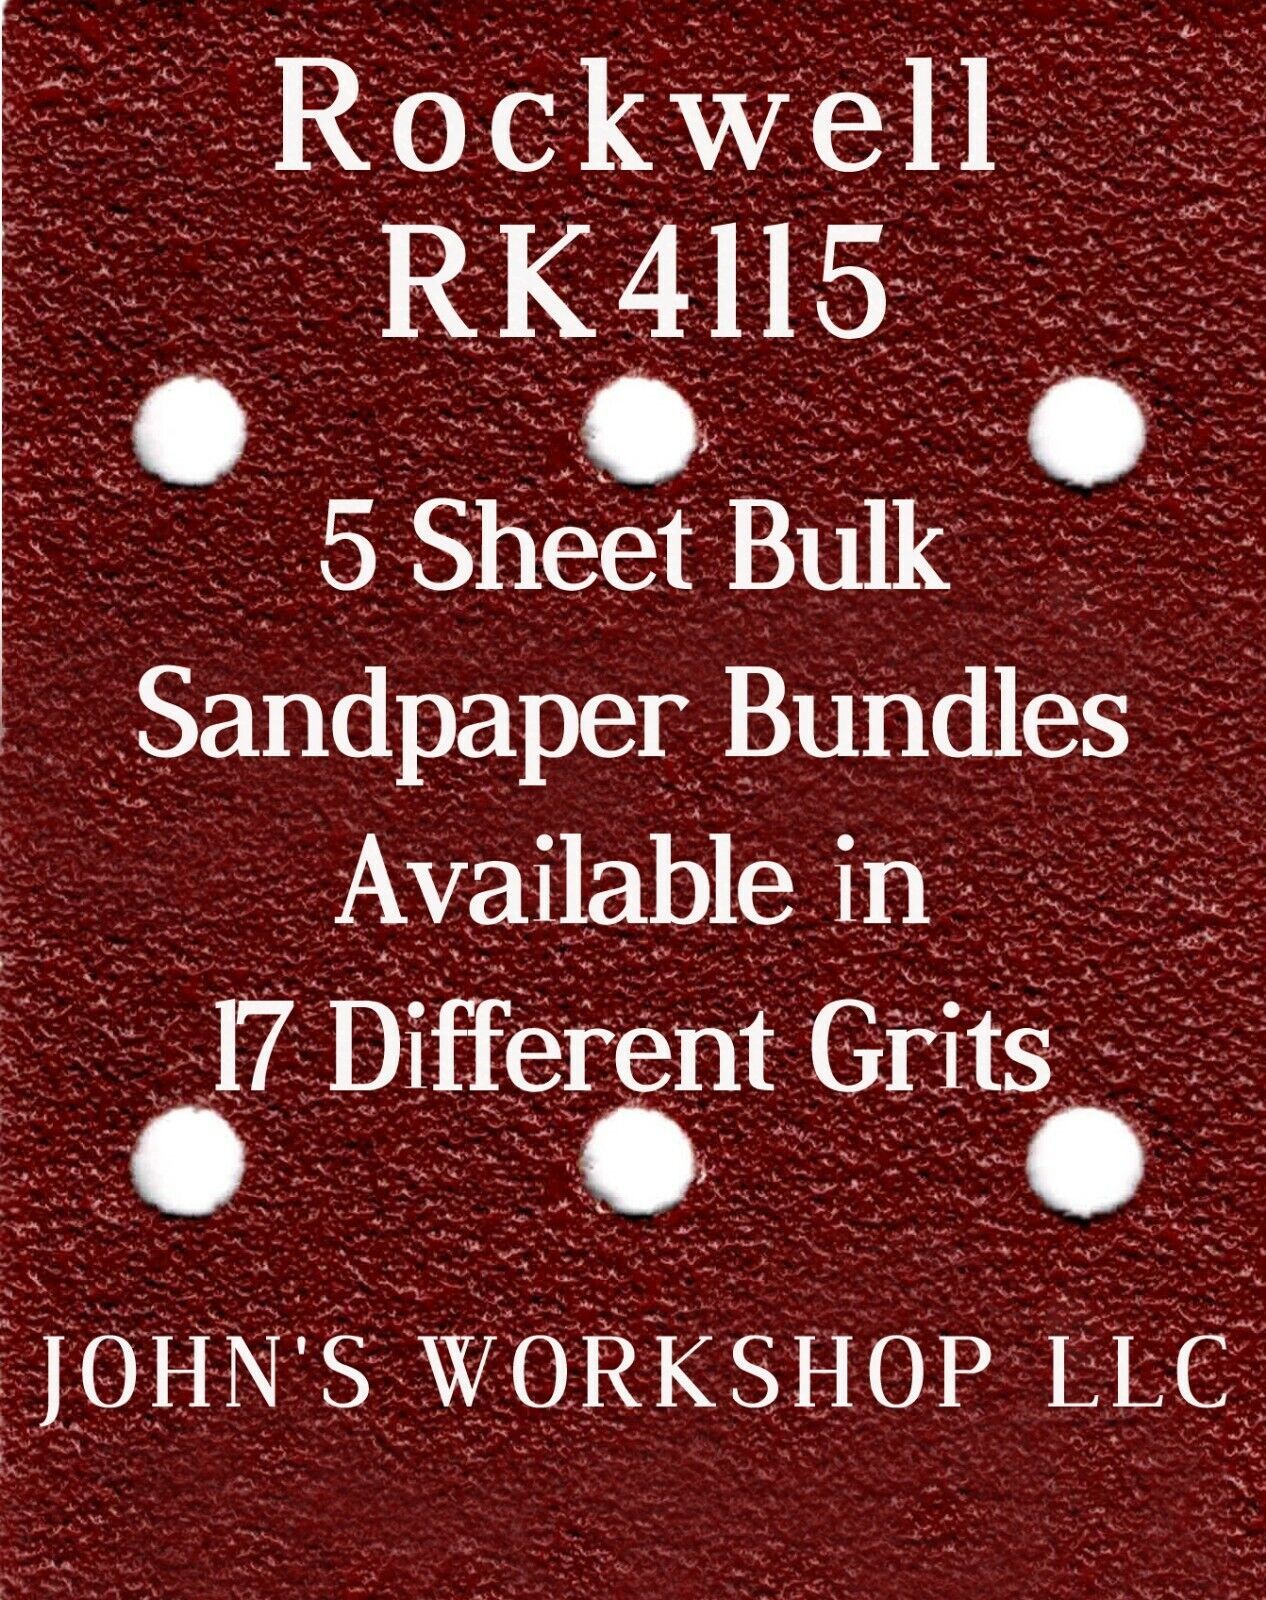 Rockwell RK4115 - 1/4 Sheet - 17 Grits - No-Slip - 5 Sandpaper Bulk Bundles - $4.99